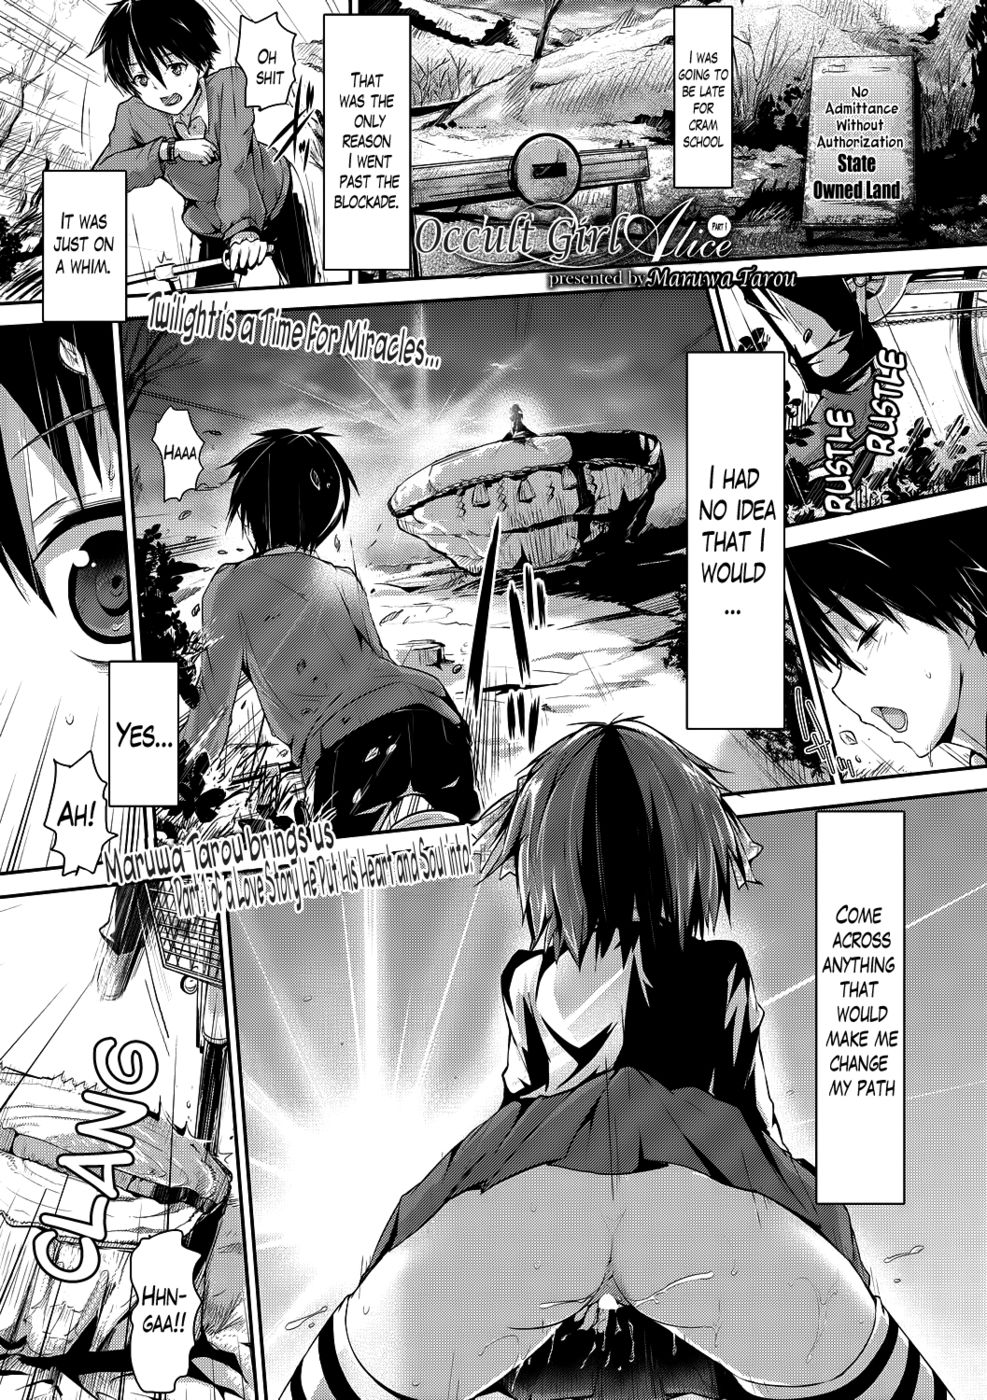 Hentai Manga Comic-Occult Girl Alice-Chapter 1-1